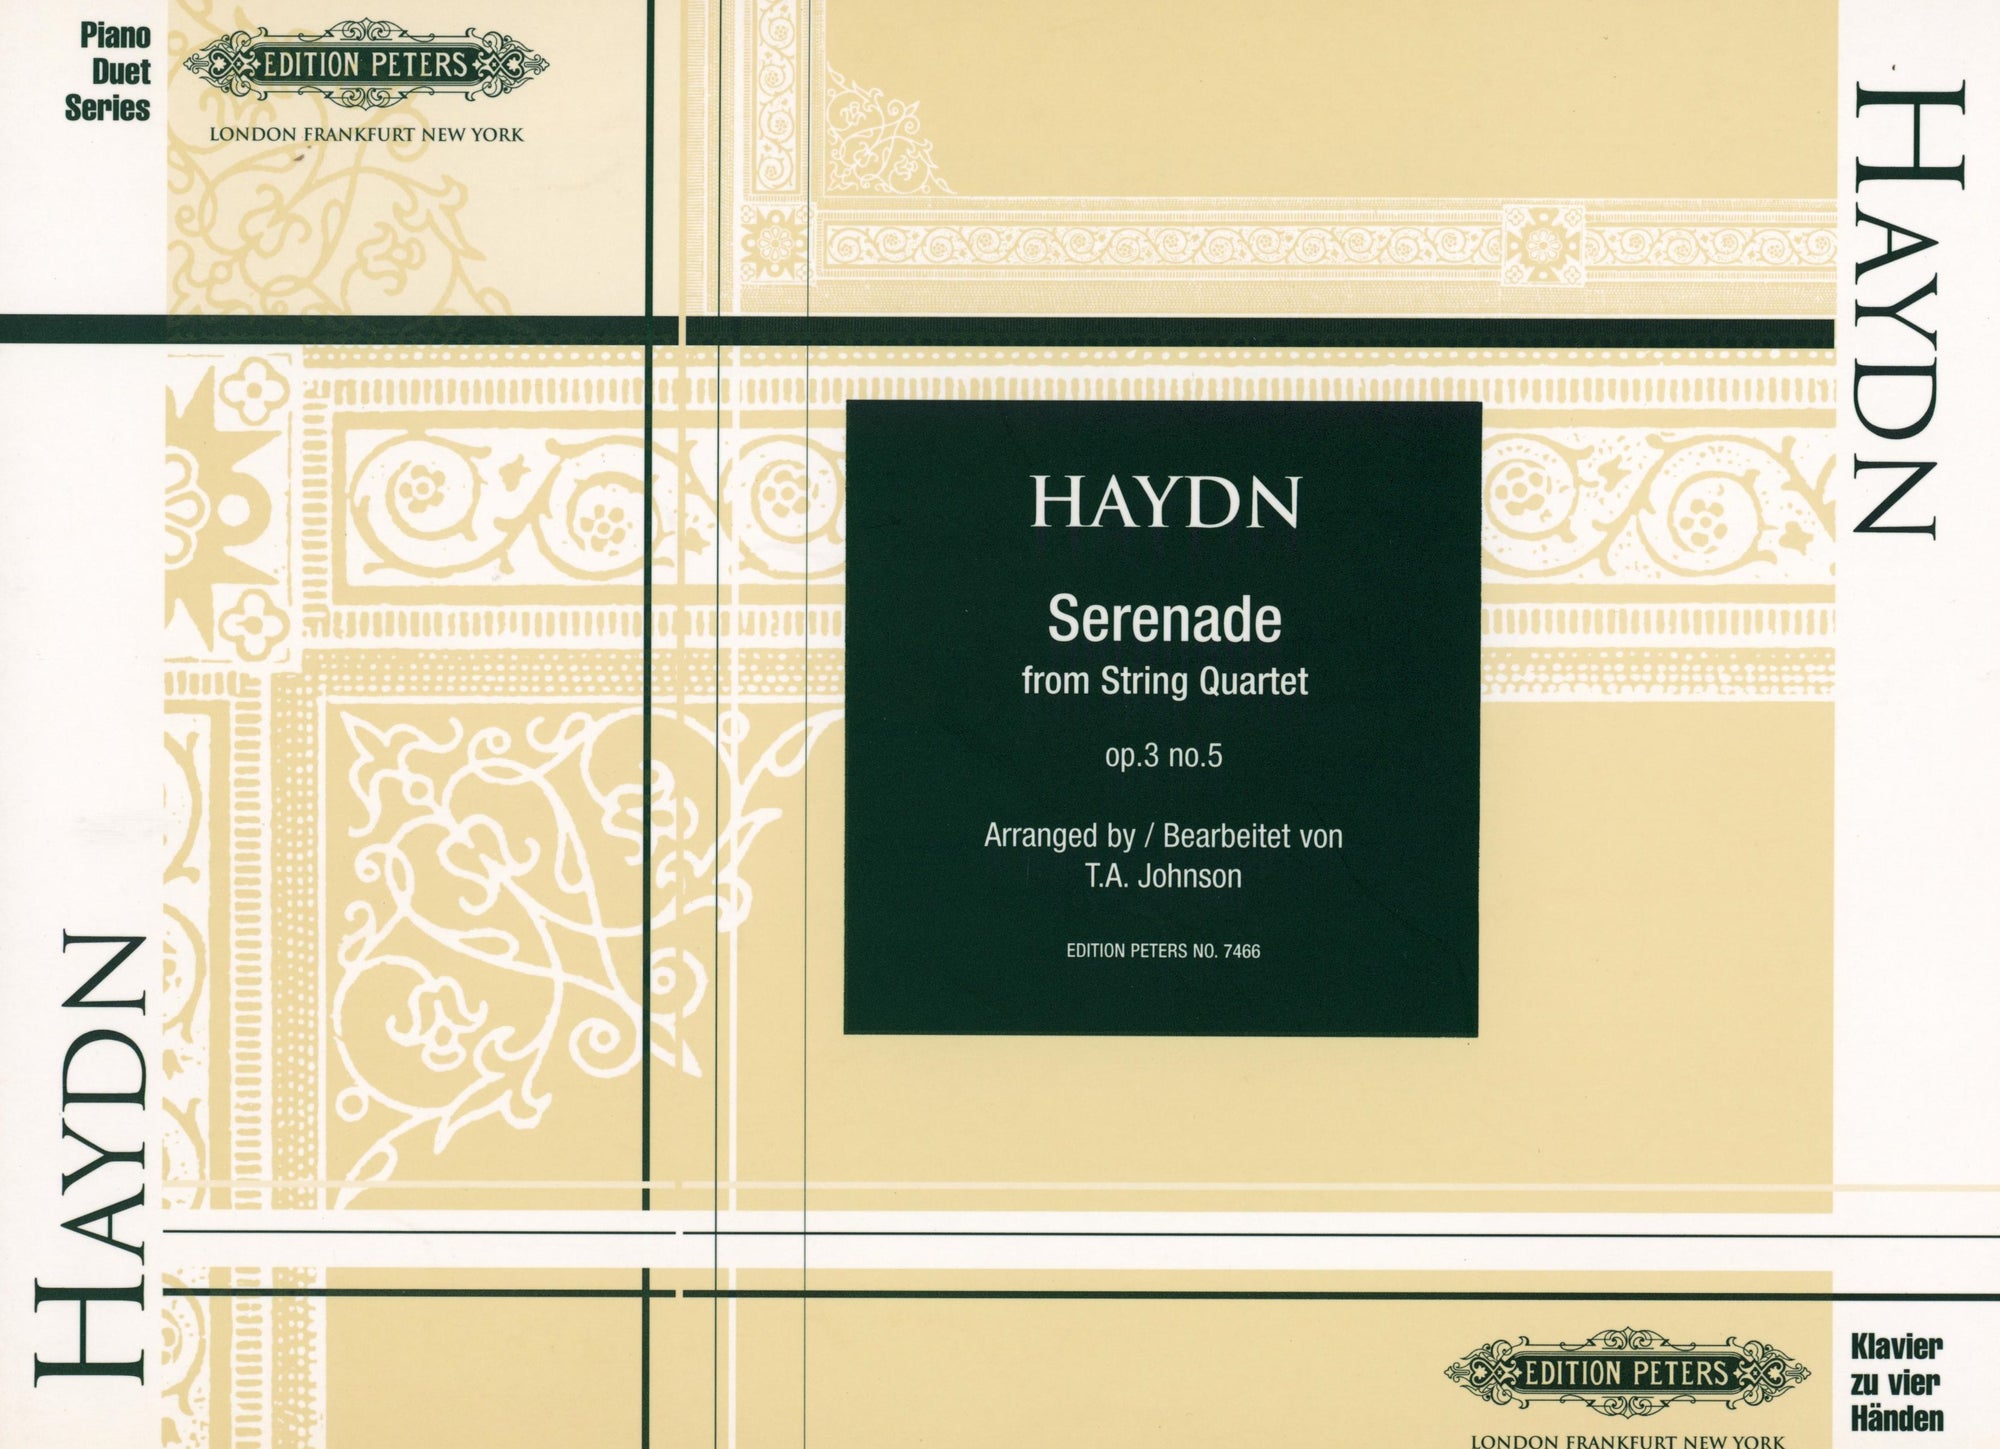 Haydn: Serenade from String Quartet, Op. 3, No. 5 (arr. for piano 4-hands)